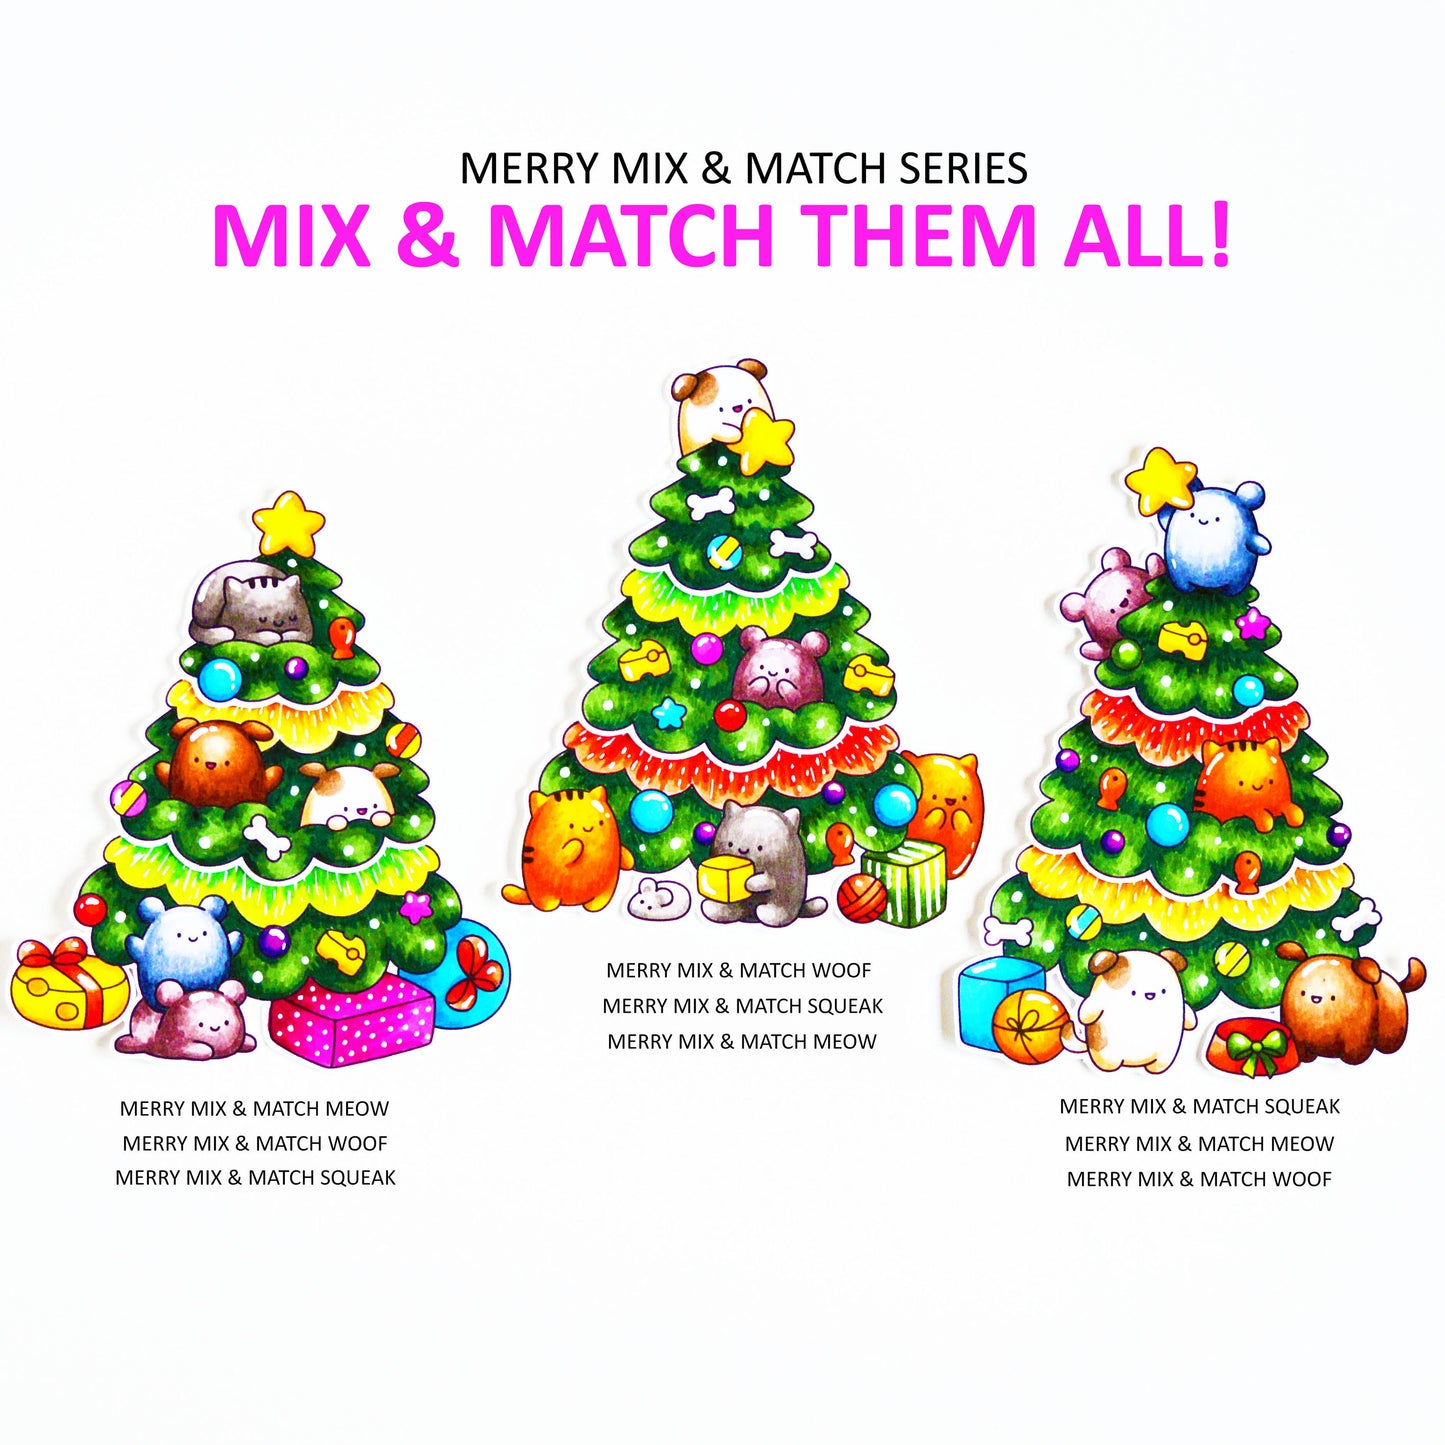 Merry Mix & Match Meow